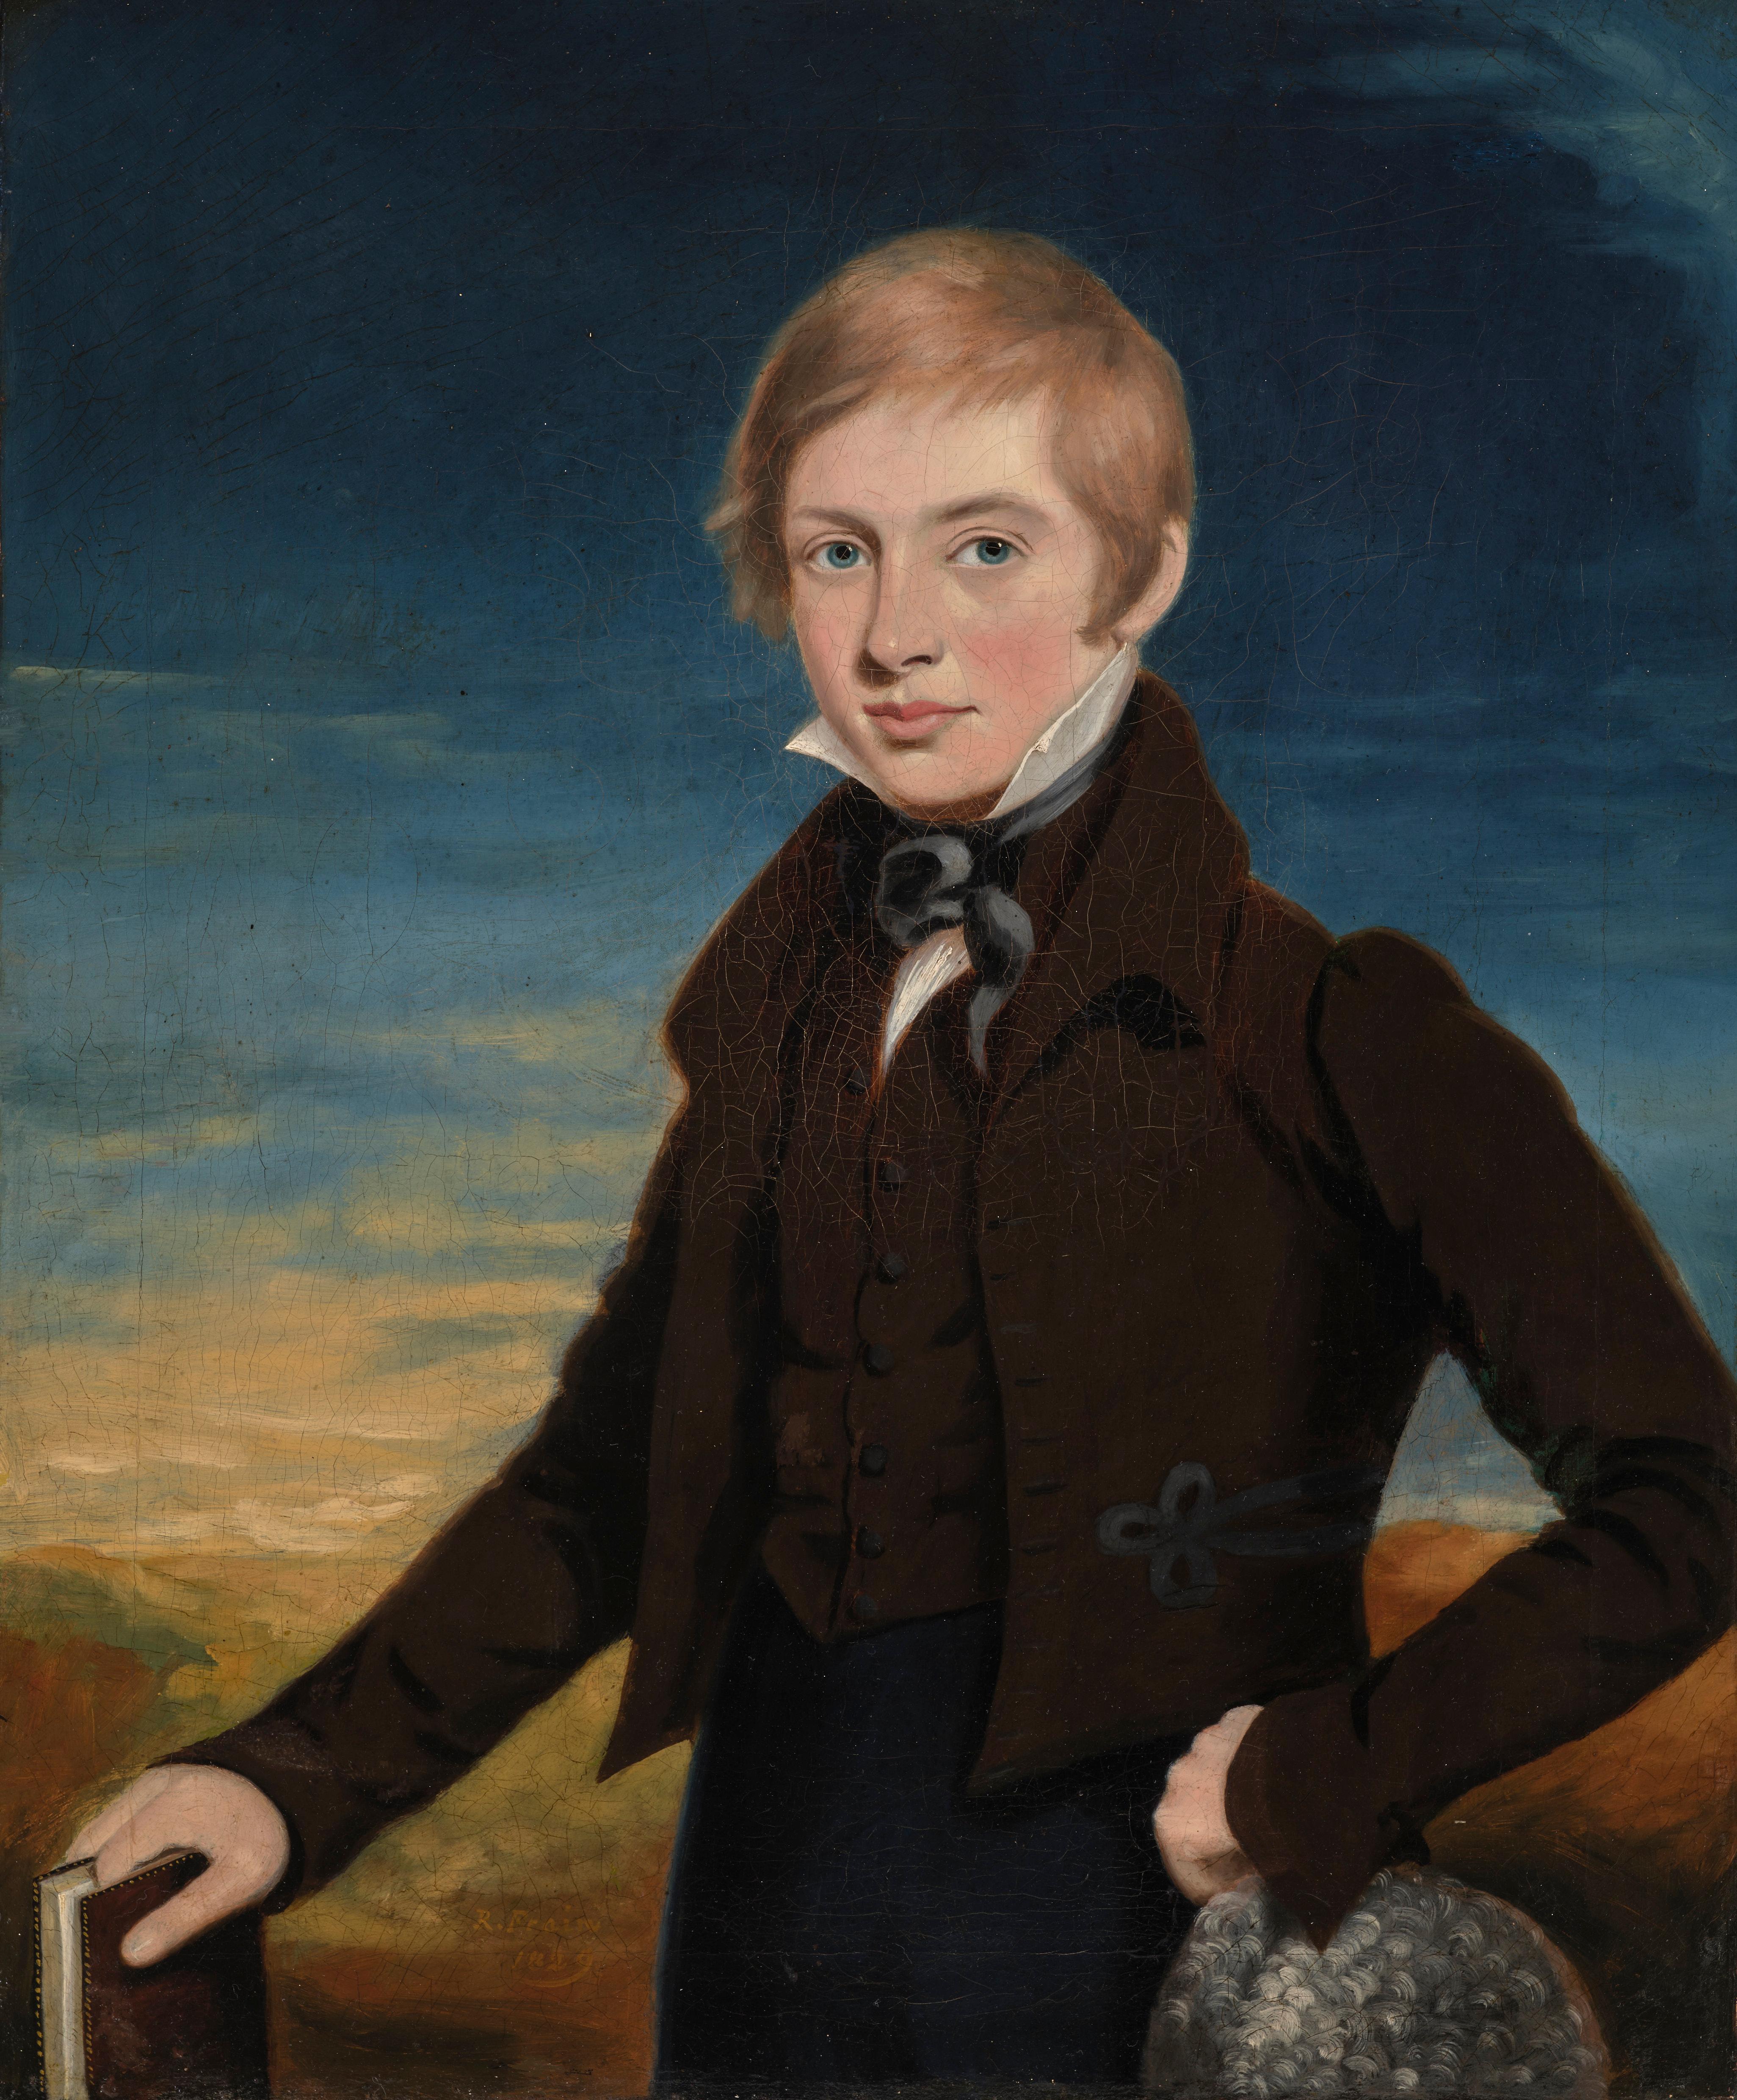 Portrait of George Byng, later 7th Viscount Torrington - Brown Portrait Painting by Robert Frain